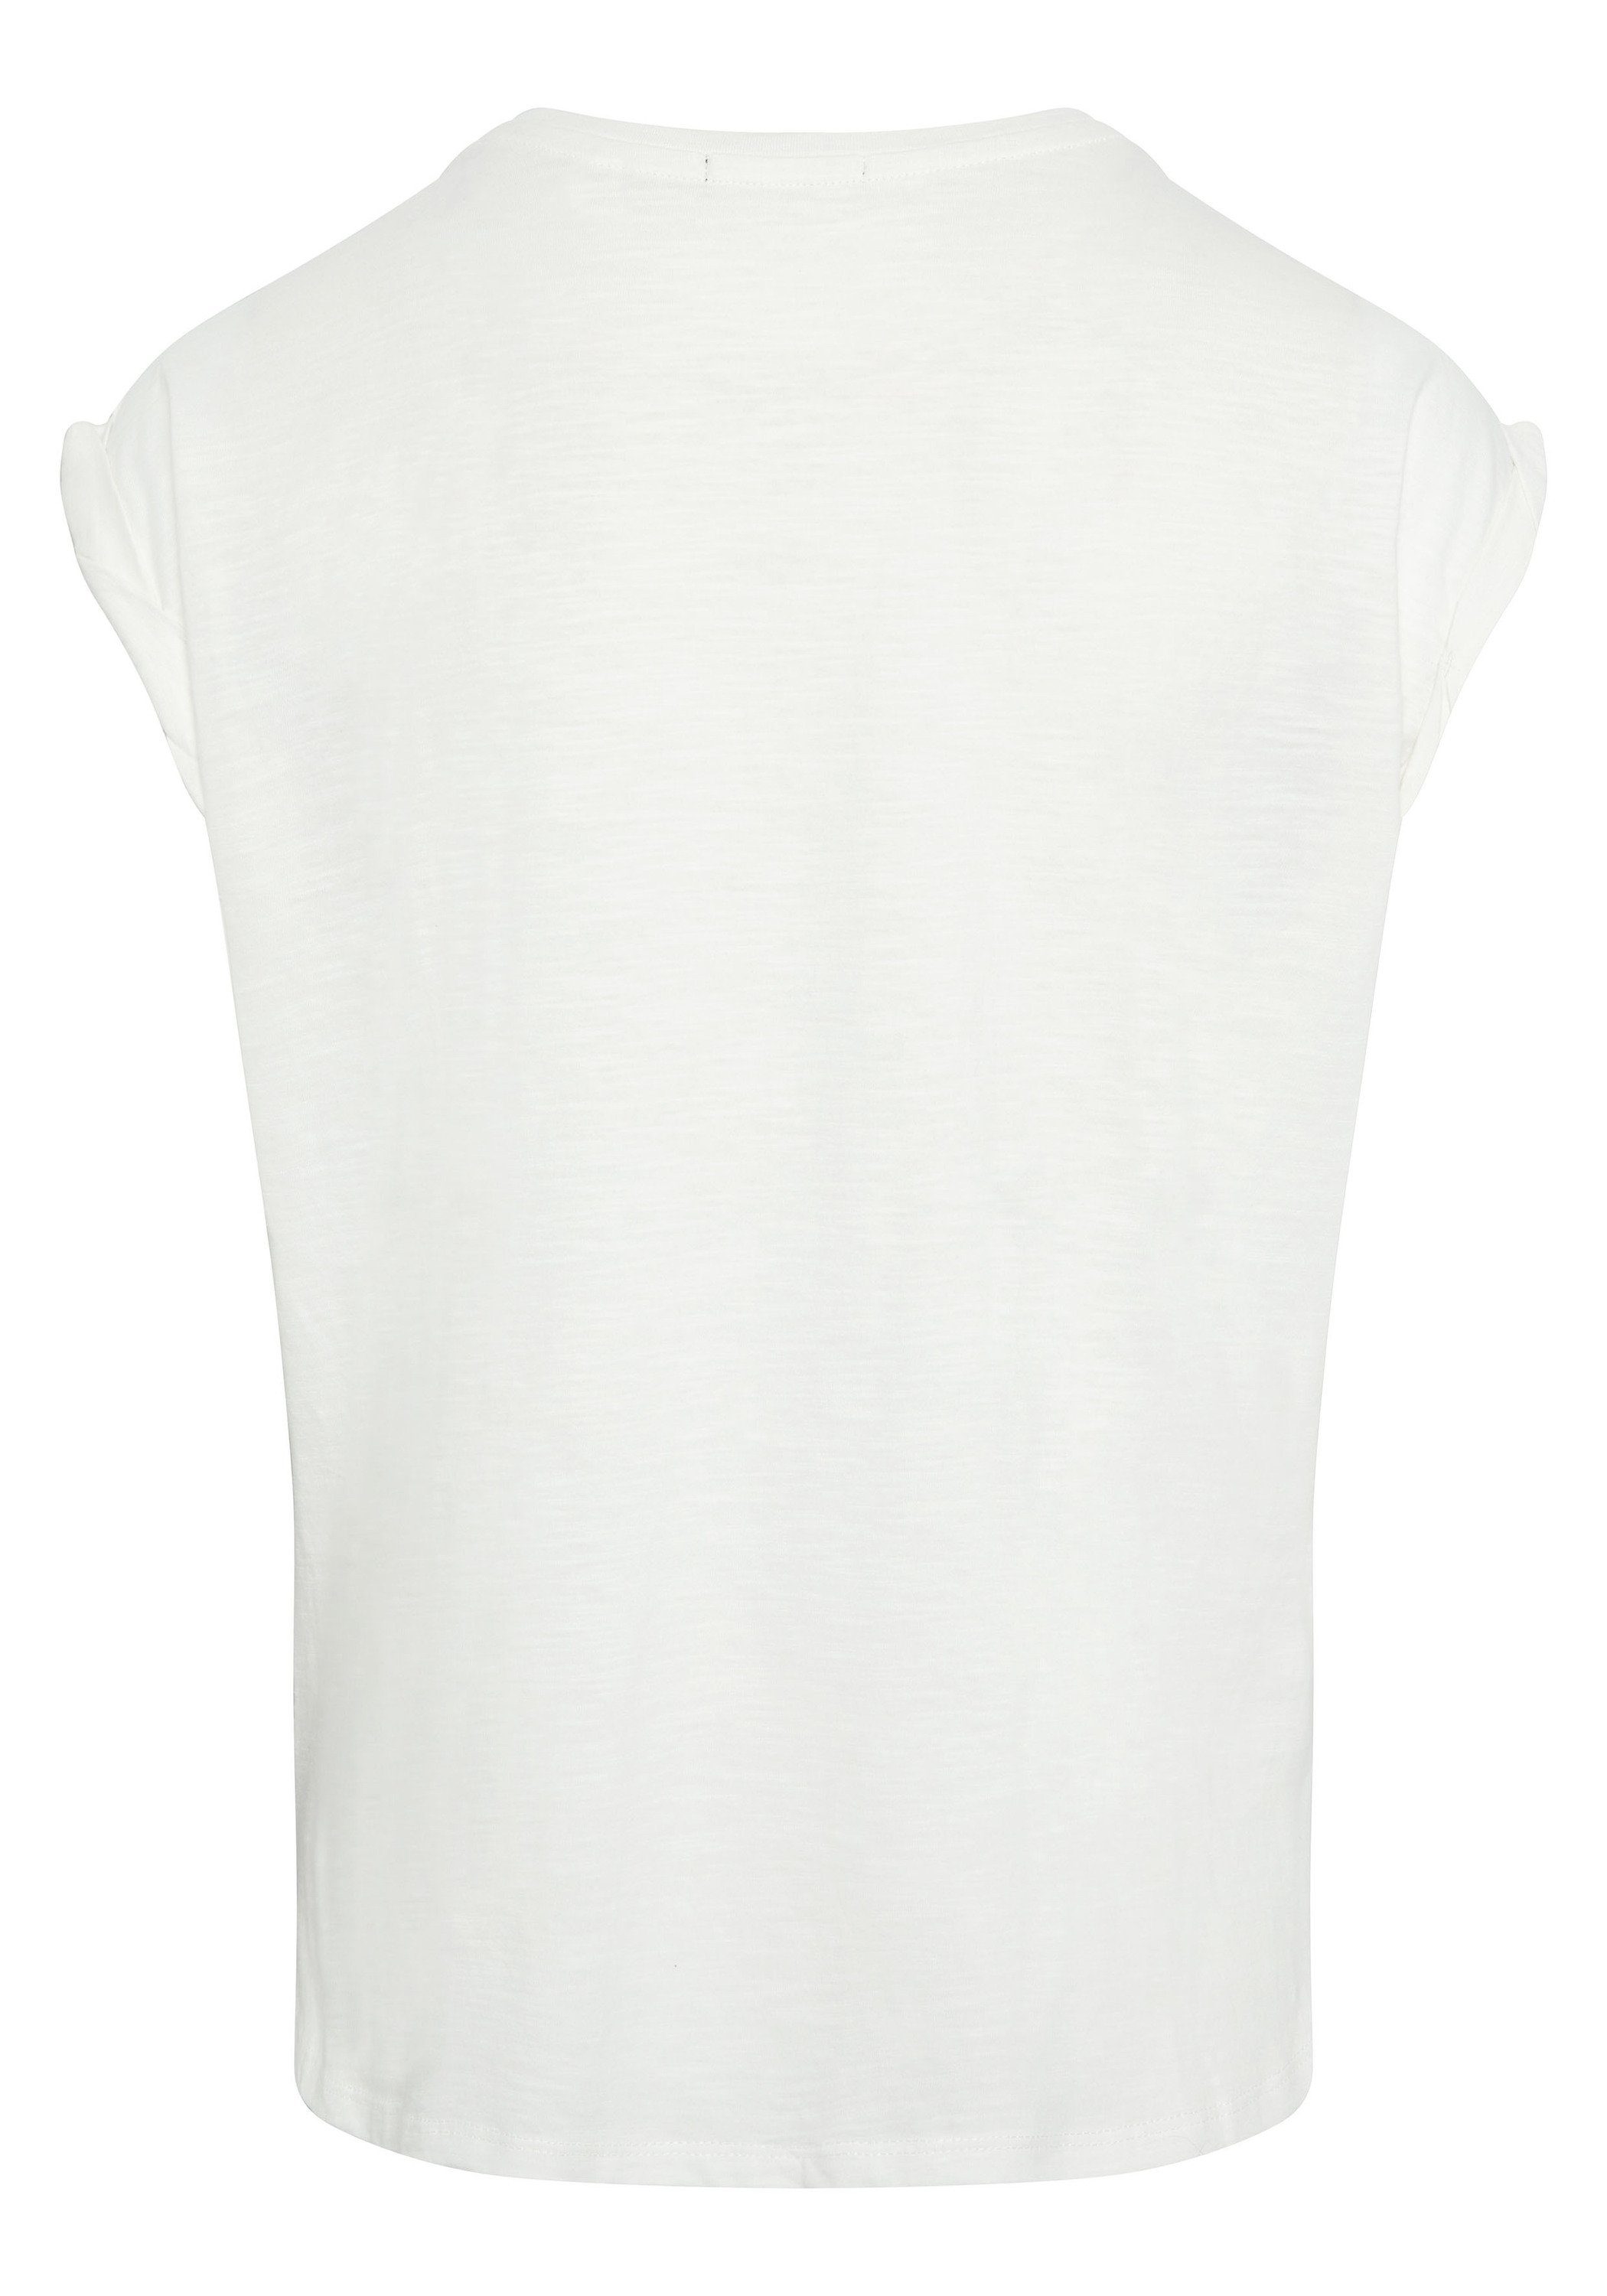 Chiemsee Print-Shirt T-Shirt mit White 1 Star Fotoprint 11-4202